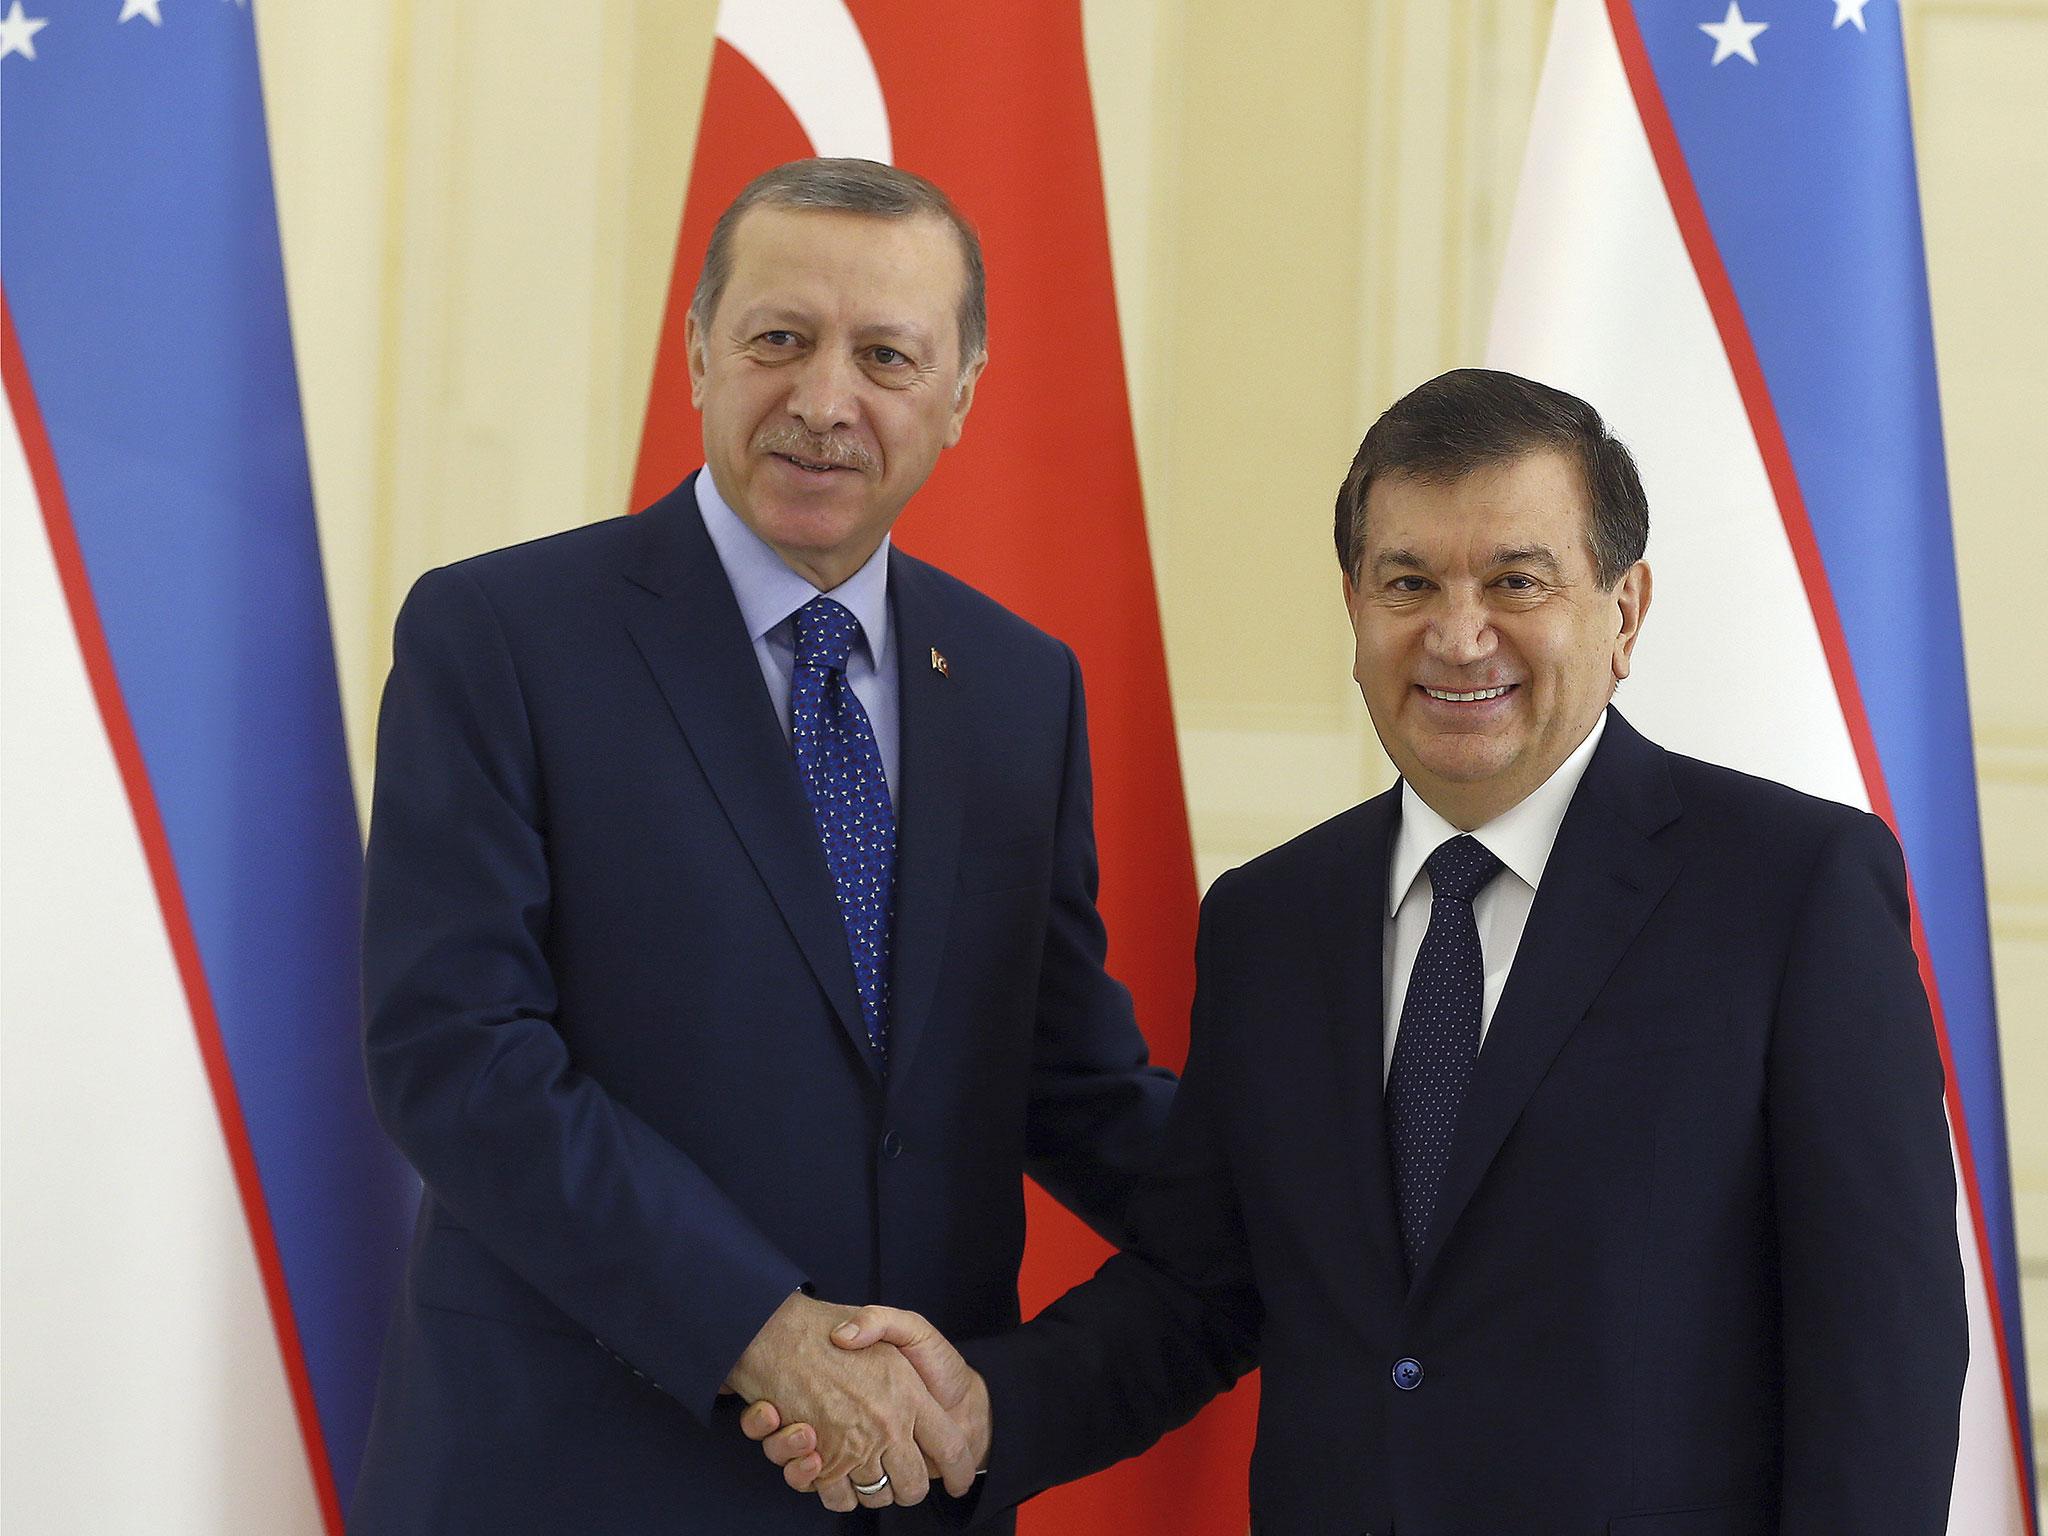 Turkey's President Recep Tayyip Erdogan, left, and Uzbek President Shavkat Mirziyoyev shake hands before a meeting in Samarkand, Uzbekistan, Friday, 18 November, 2016